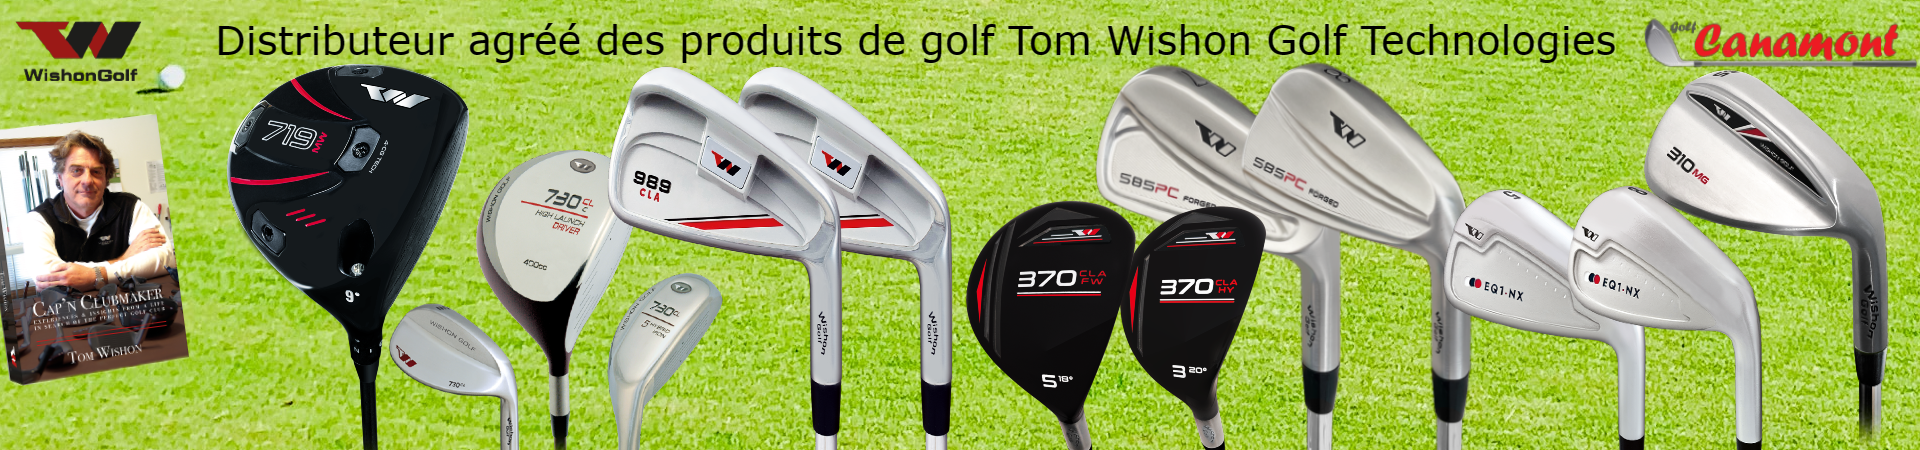 La gamme de produits Wishon Golf